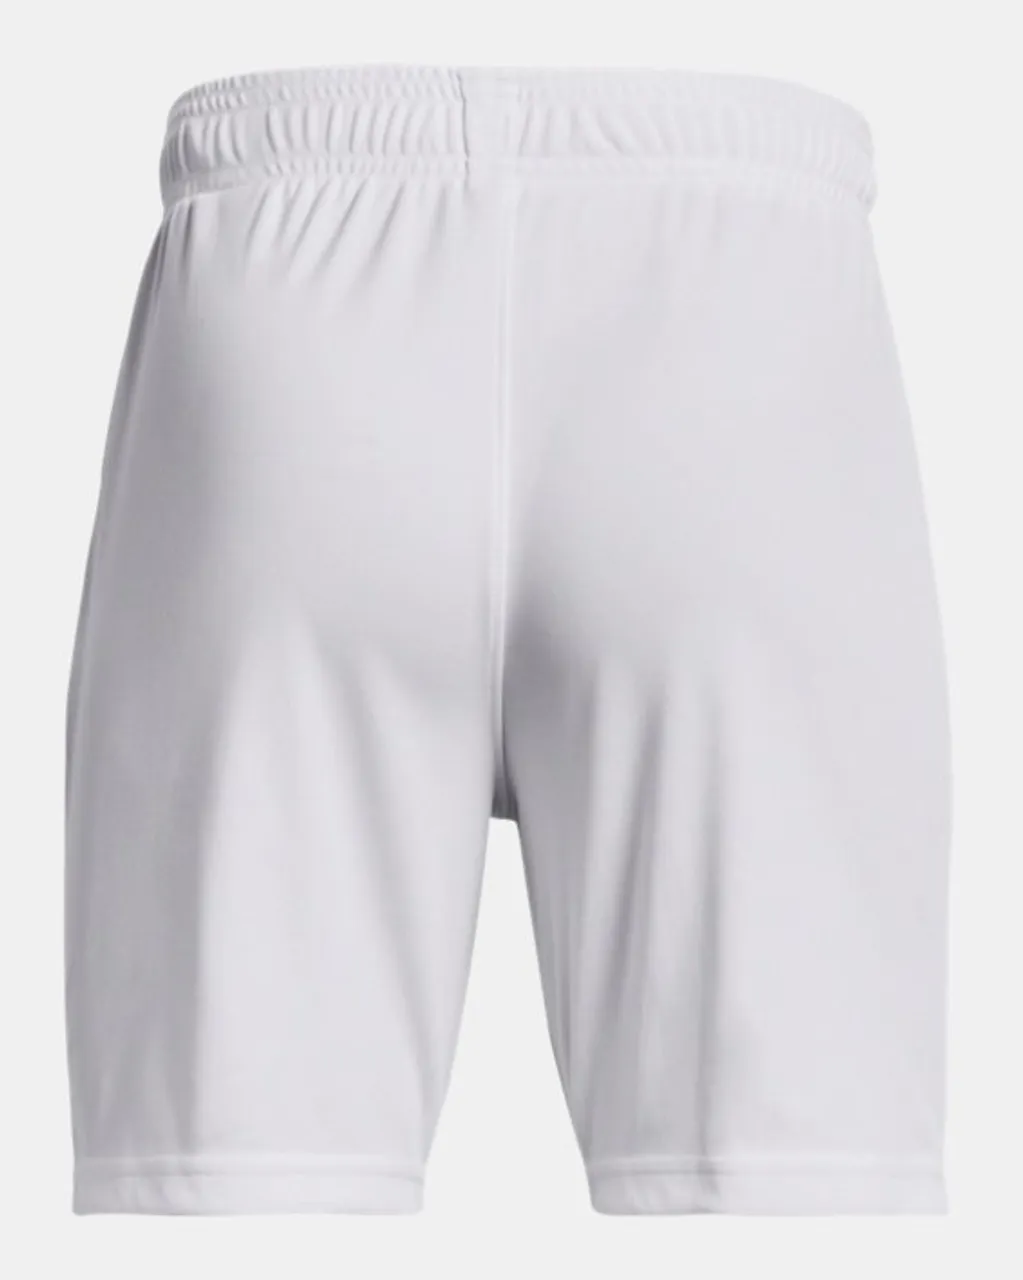 Boys'  Under Armour  Challenger Core Shorts White / Black YSM (50 - 54 in)